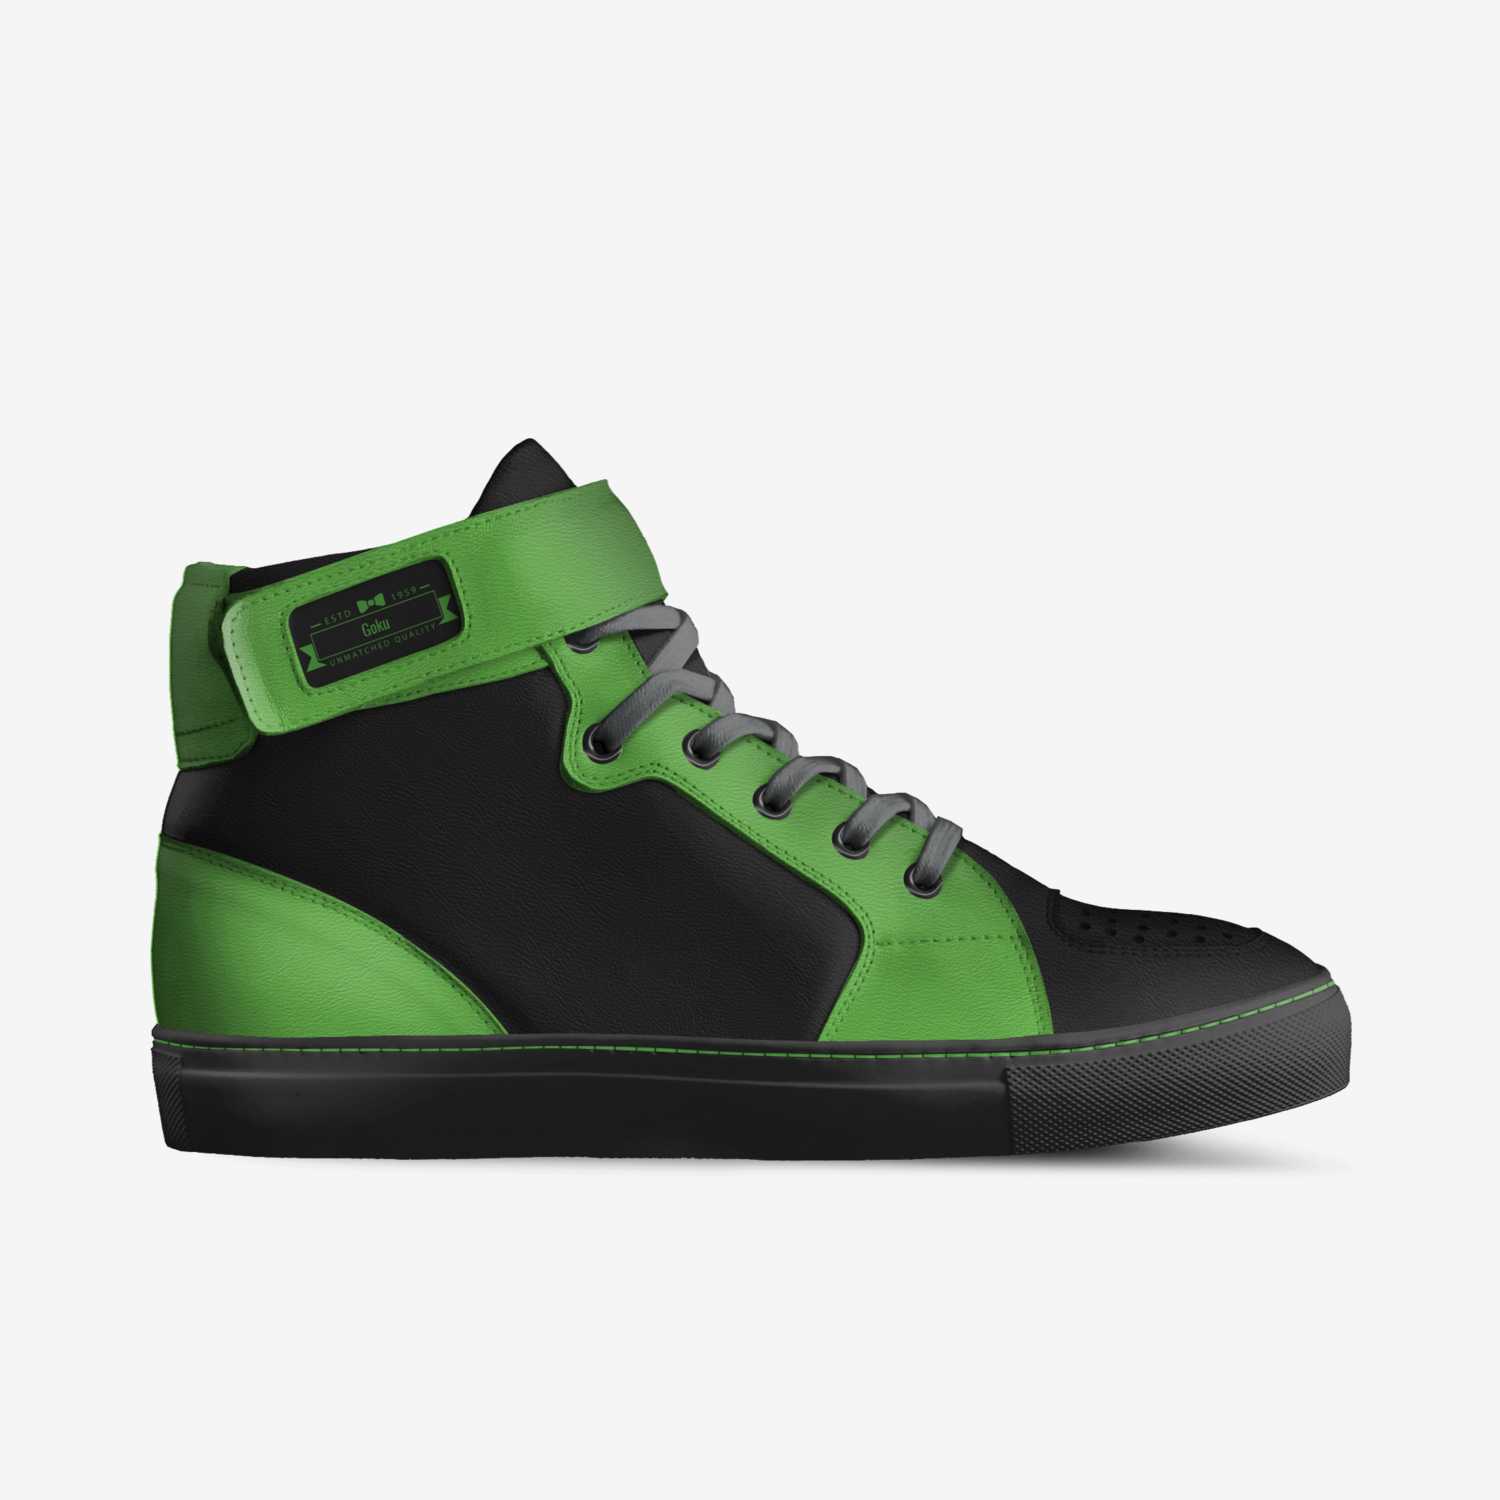 jax | A Custom Shoe concept by Jaxon Bernard